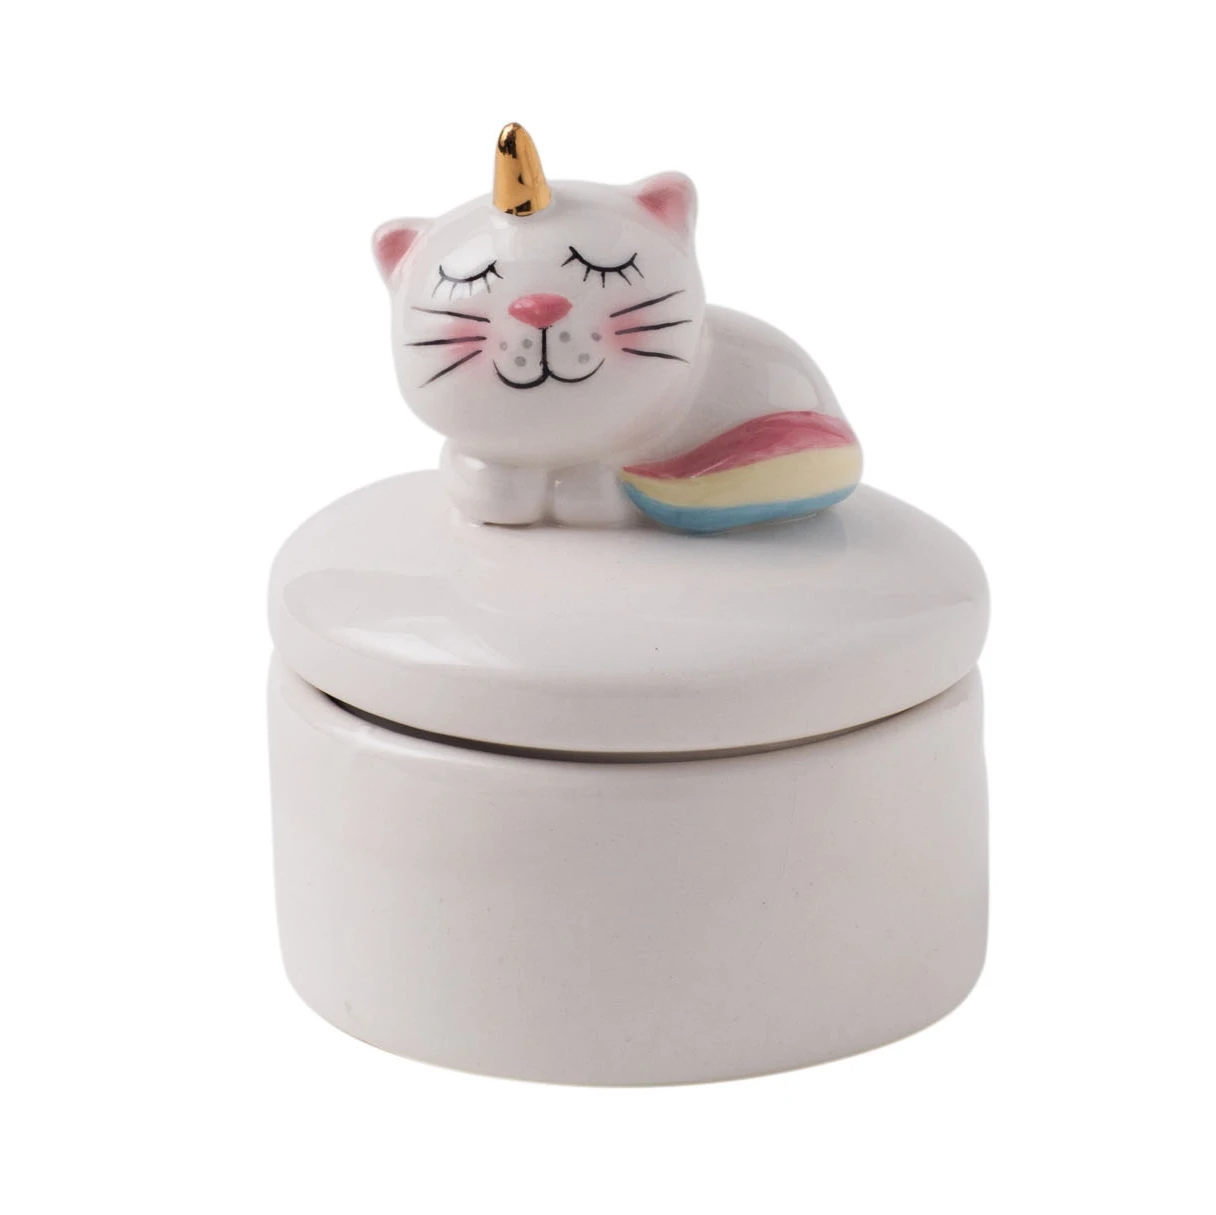 Ceramic Cartoon Cat Ring Holder Jewelry Animal Design Dish Decor Jewelry Tray Cat with Horn Ceramic Jewelry Plate